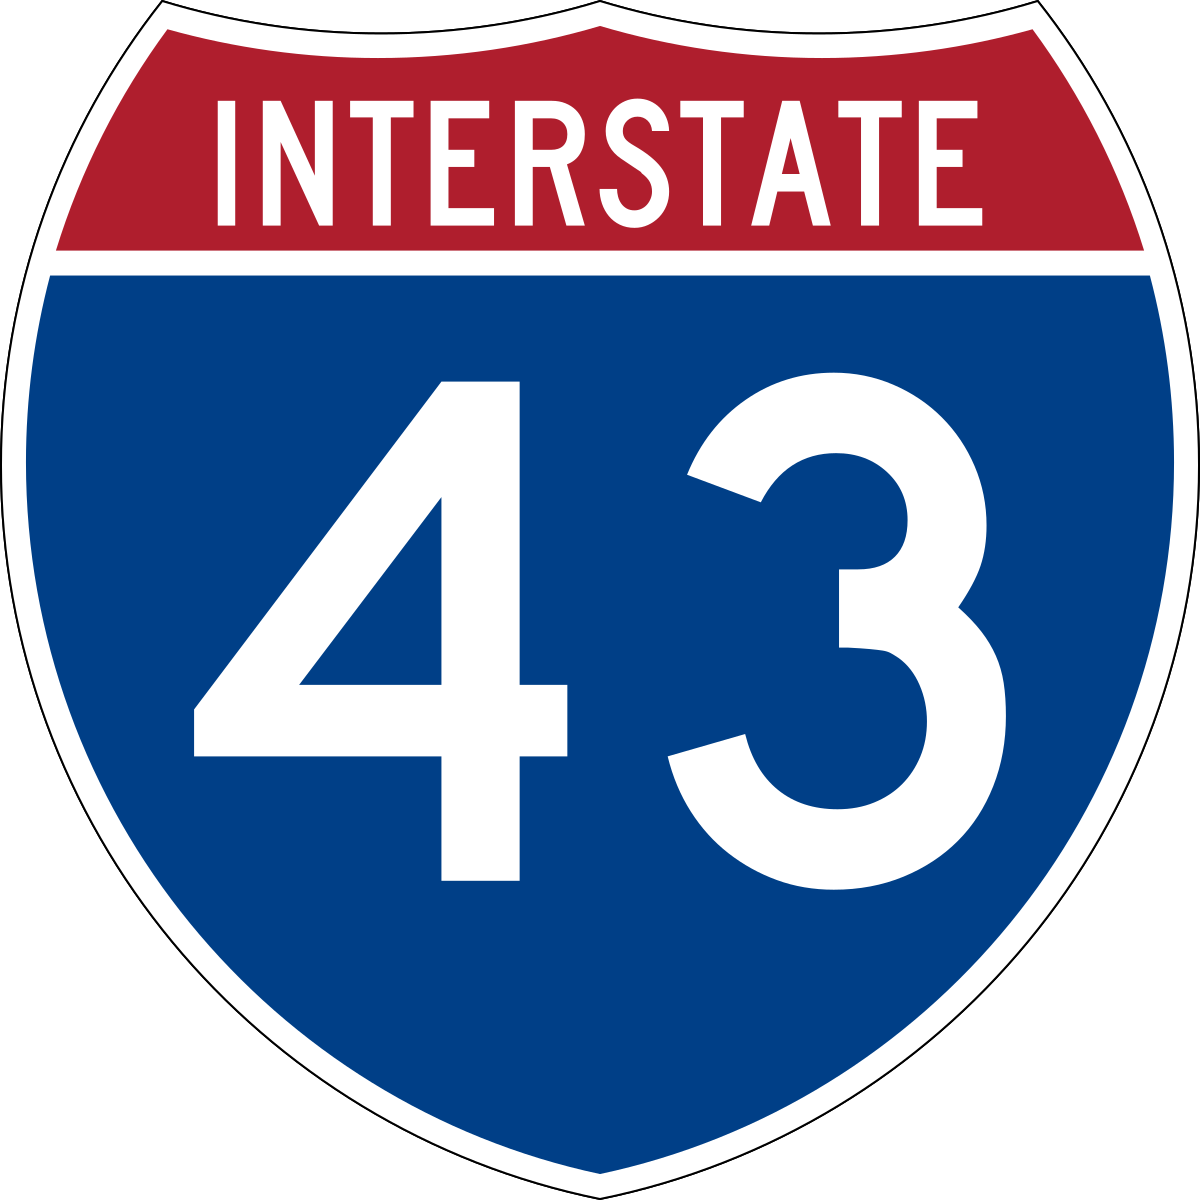 Interstate 43 - Wikipedia